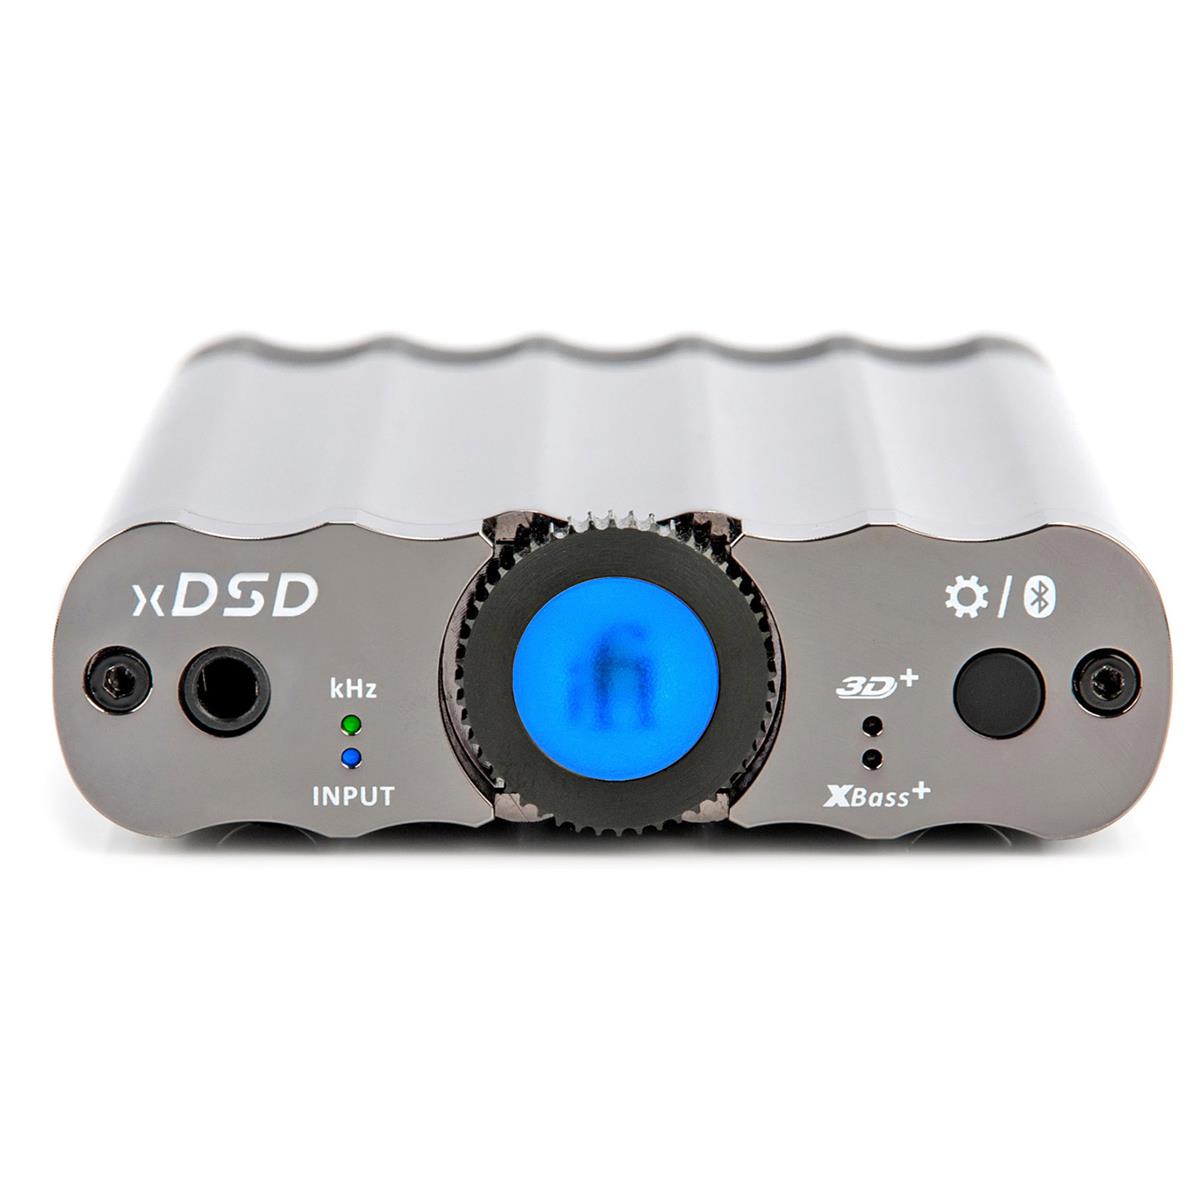 iFi AUDIO xDSD Bluetooth DAC & Headphone Amplifier $250 + free s/h